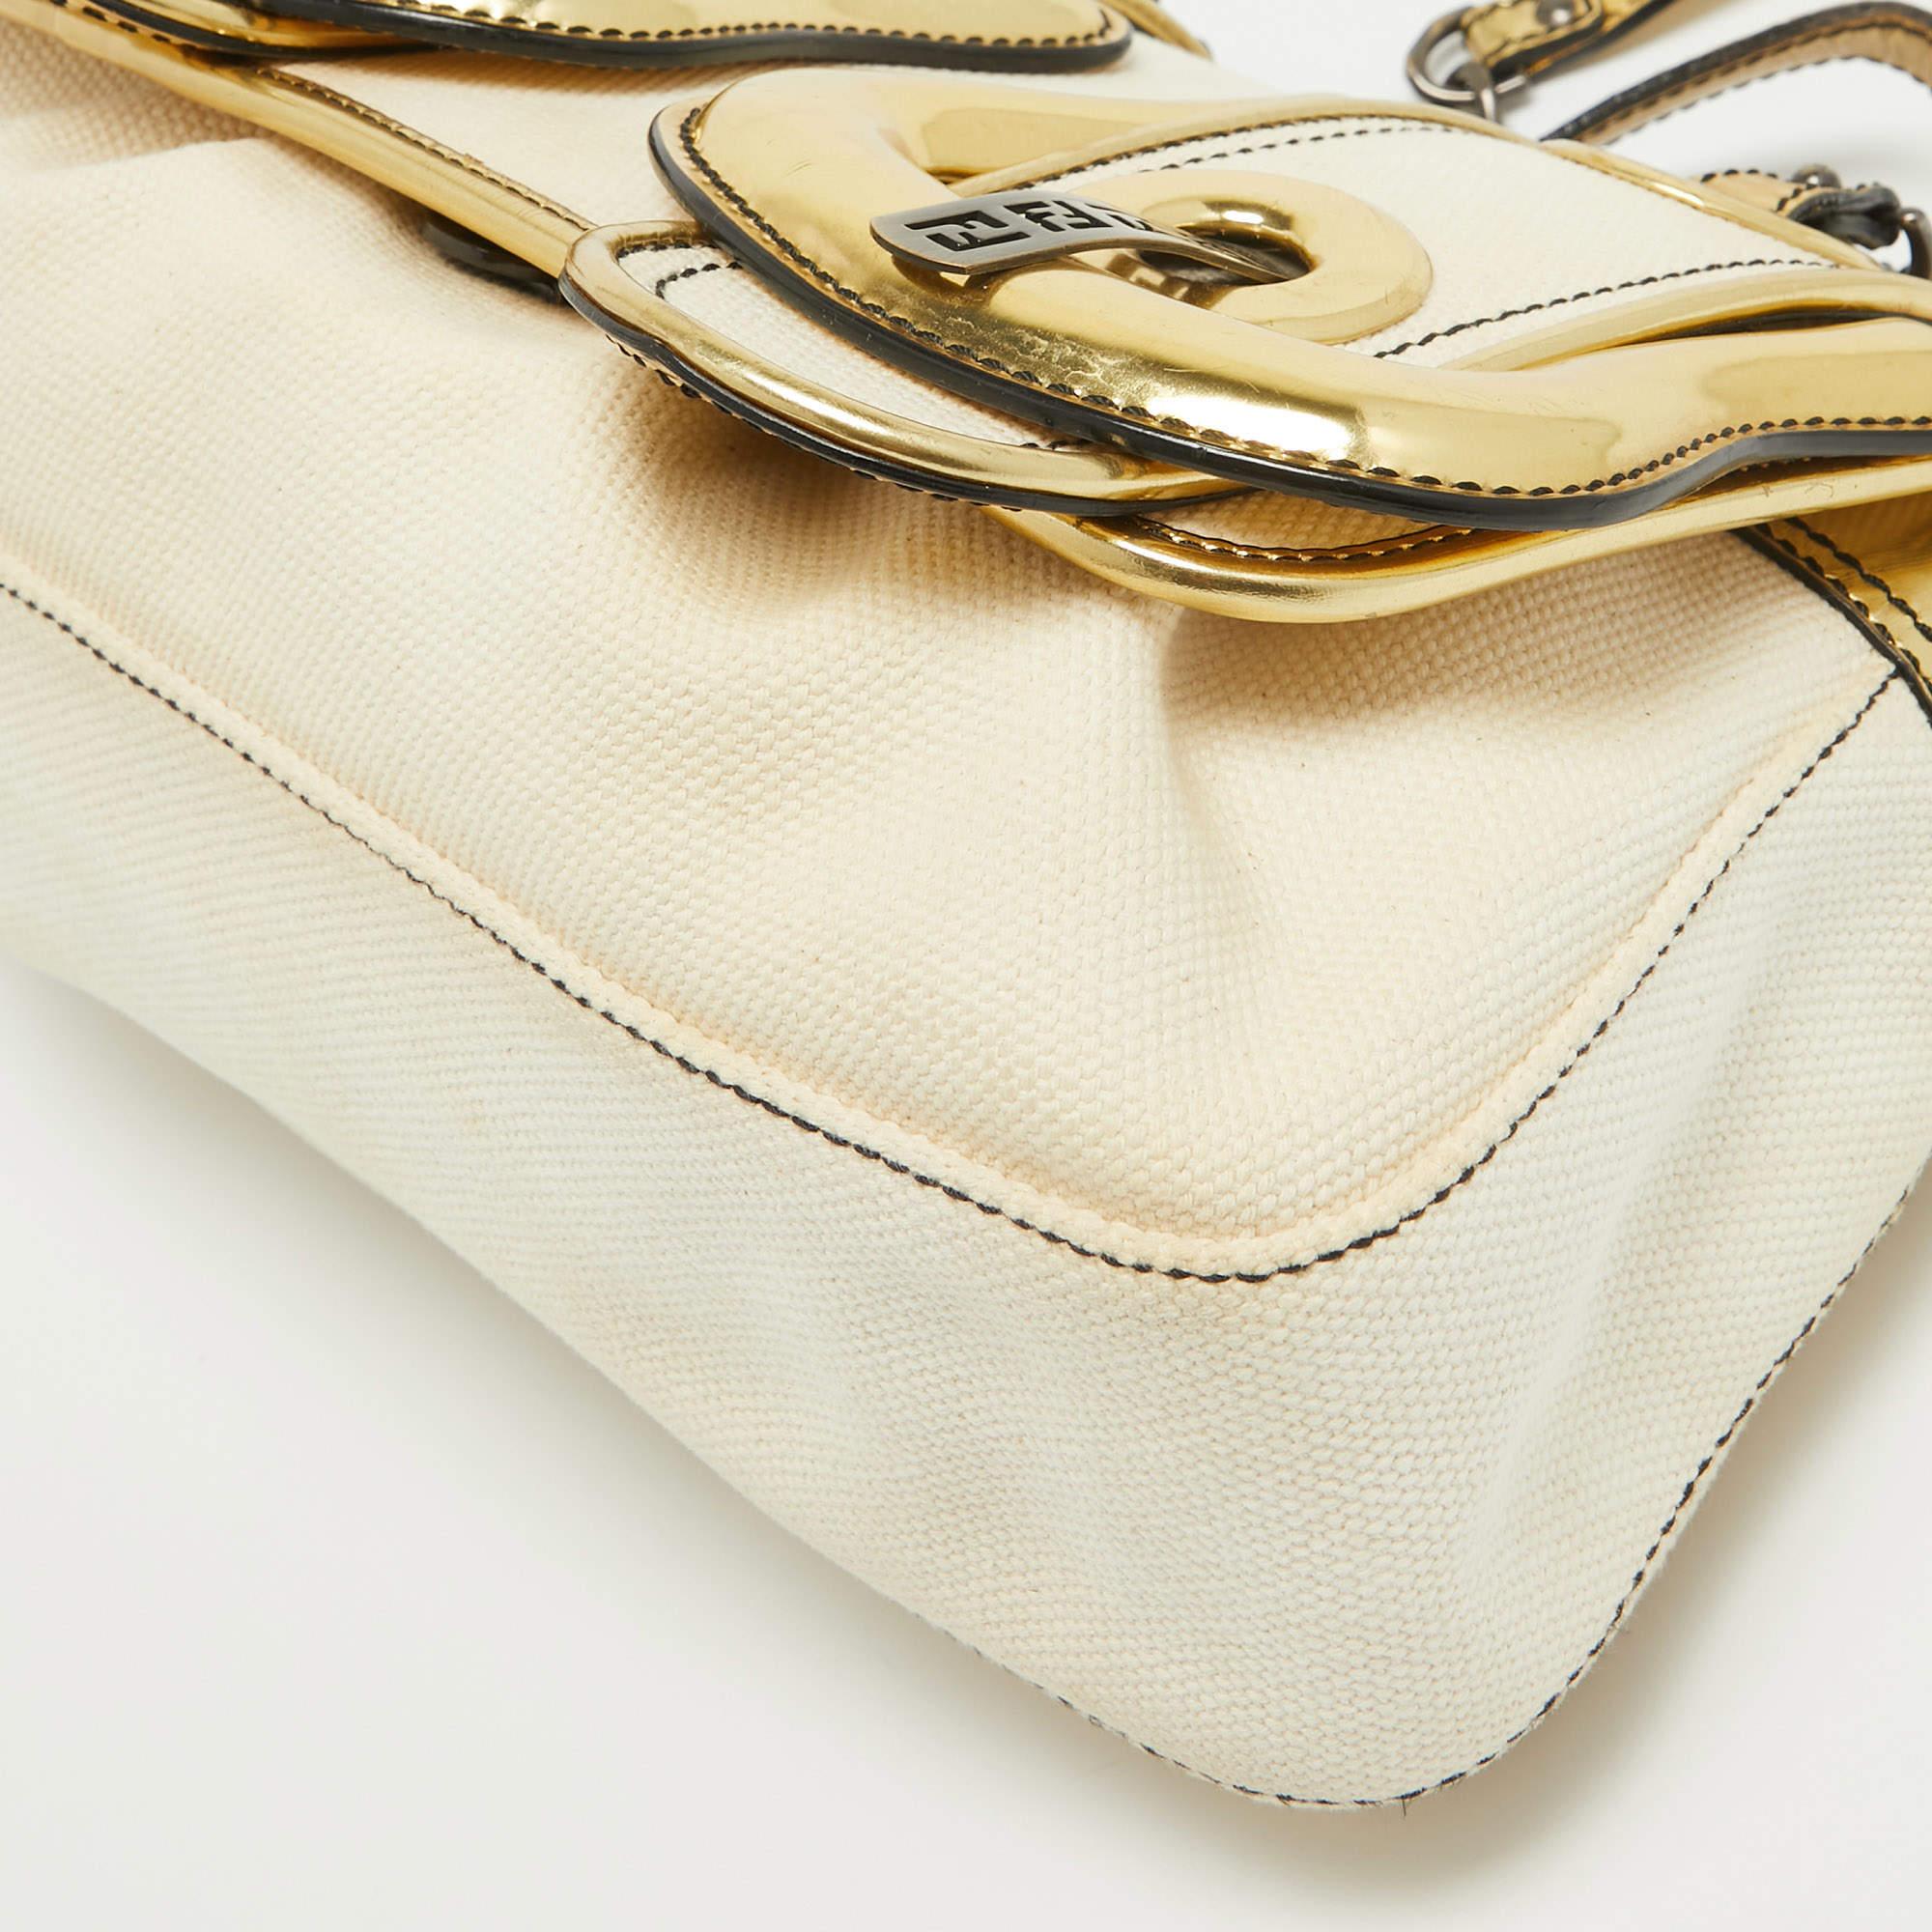 Fendi Gold/Beige Canvas and Patent Leather B Shoulder Bag For Sale 8